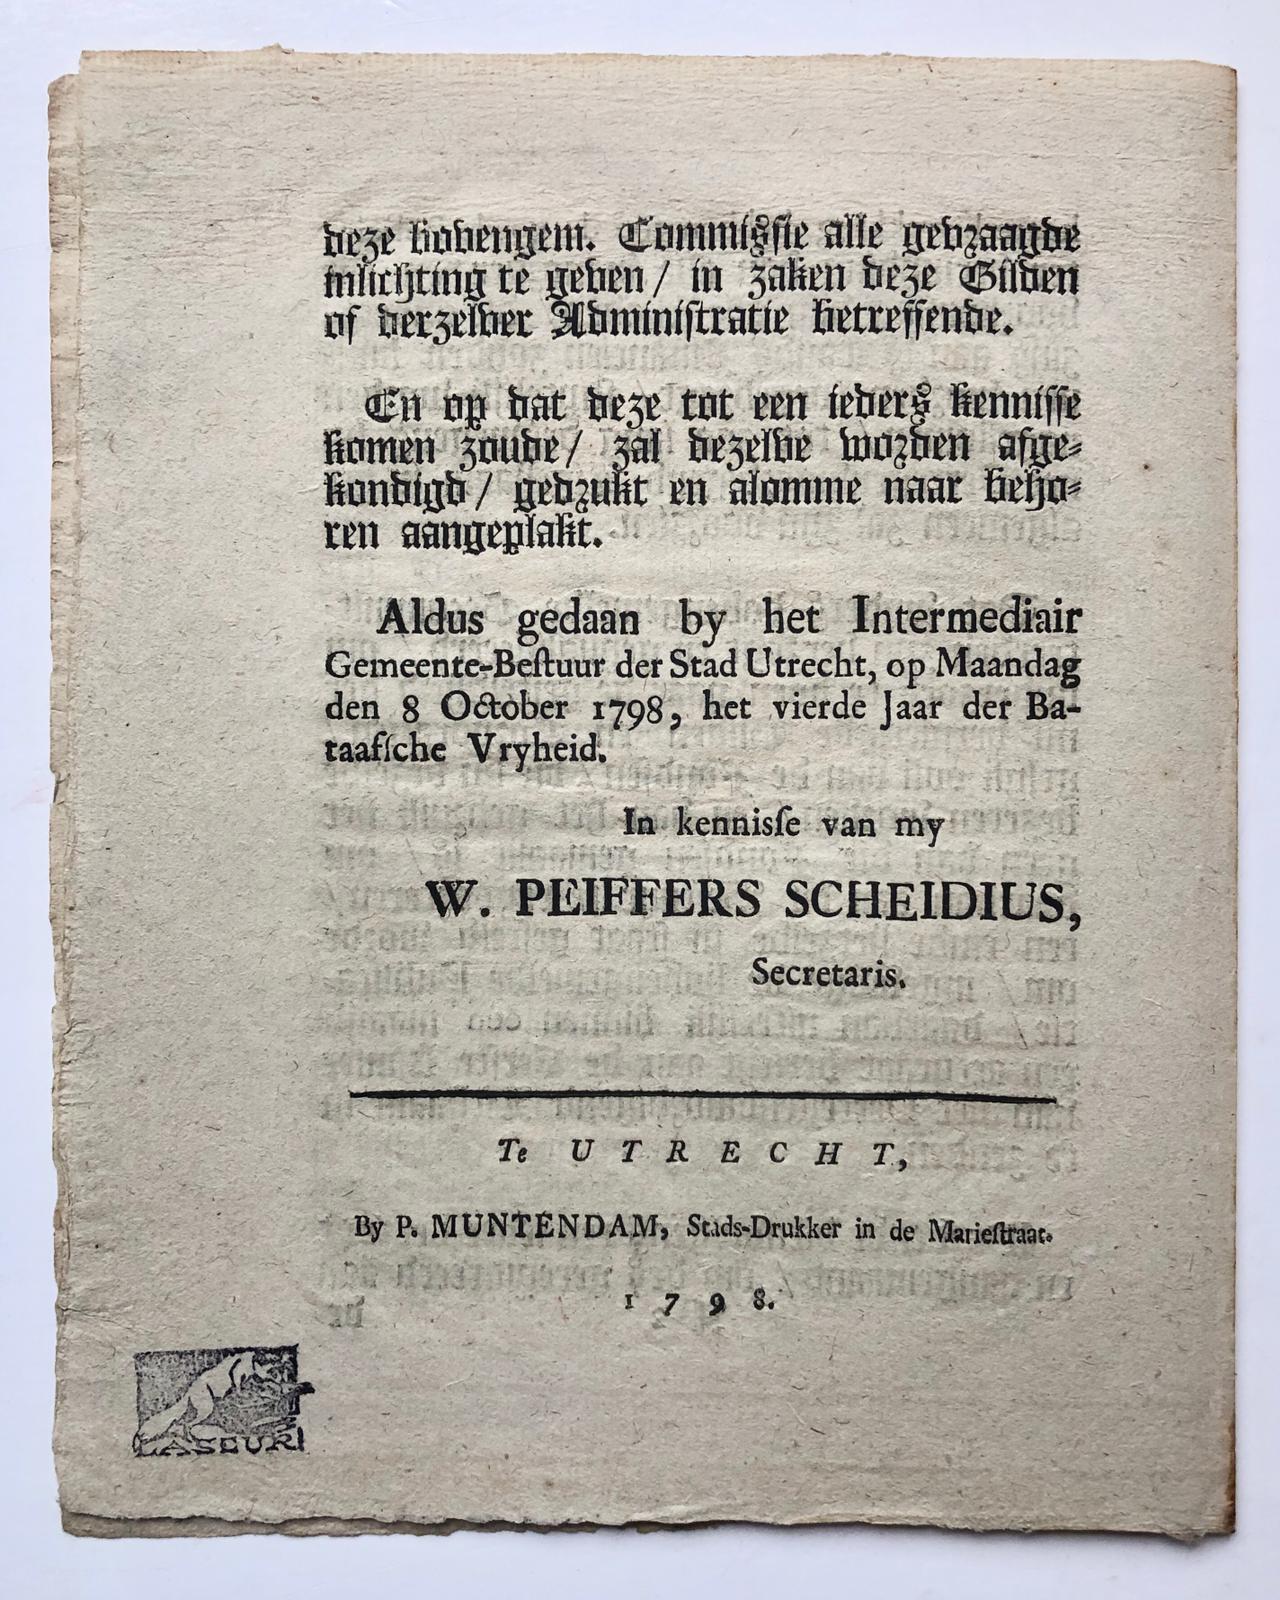 [Printed publication, Batavian Republic, 1798] Publicatie van de Raad der stad Utrecht 26-11-1795, betr. afschaffing ambachtsgilden. Gedrukt (bij P. Muntendam), folio, 1 pag.